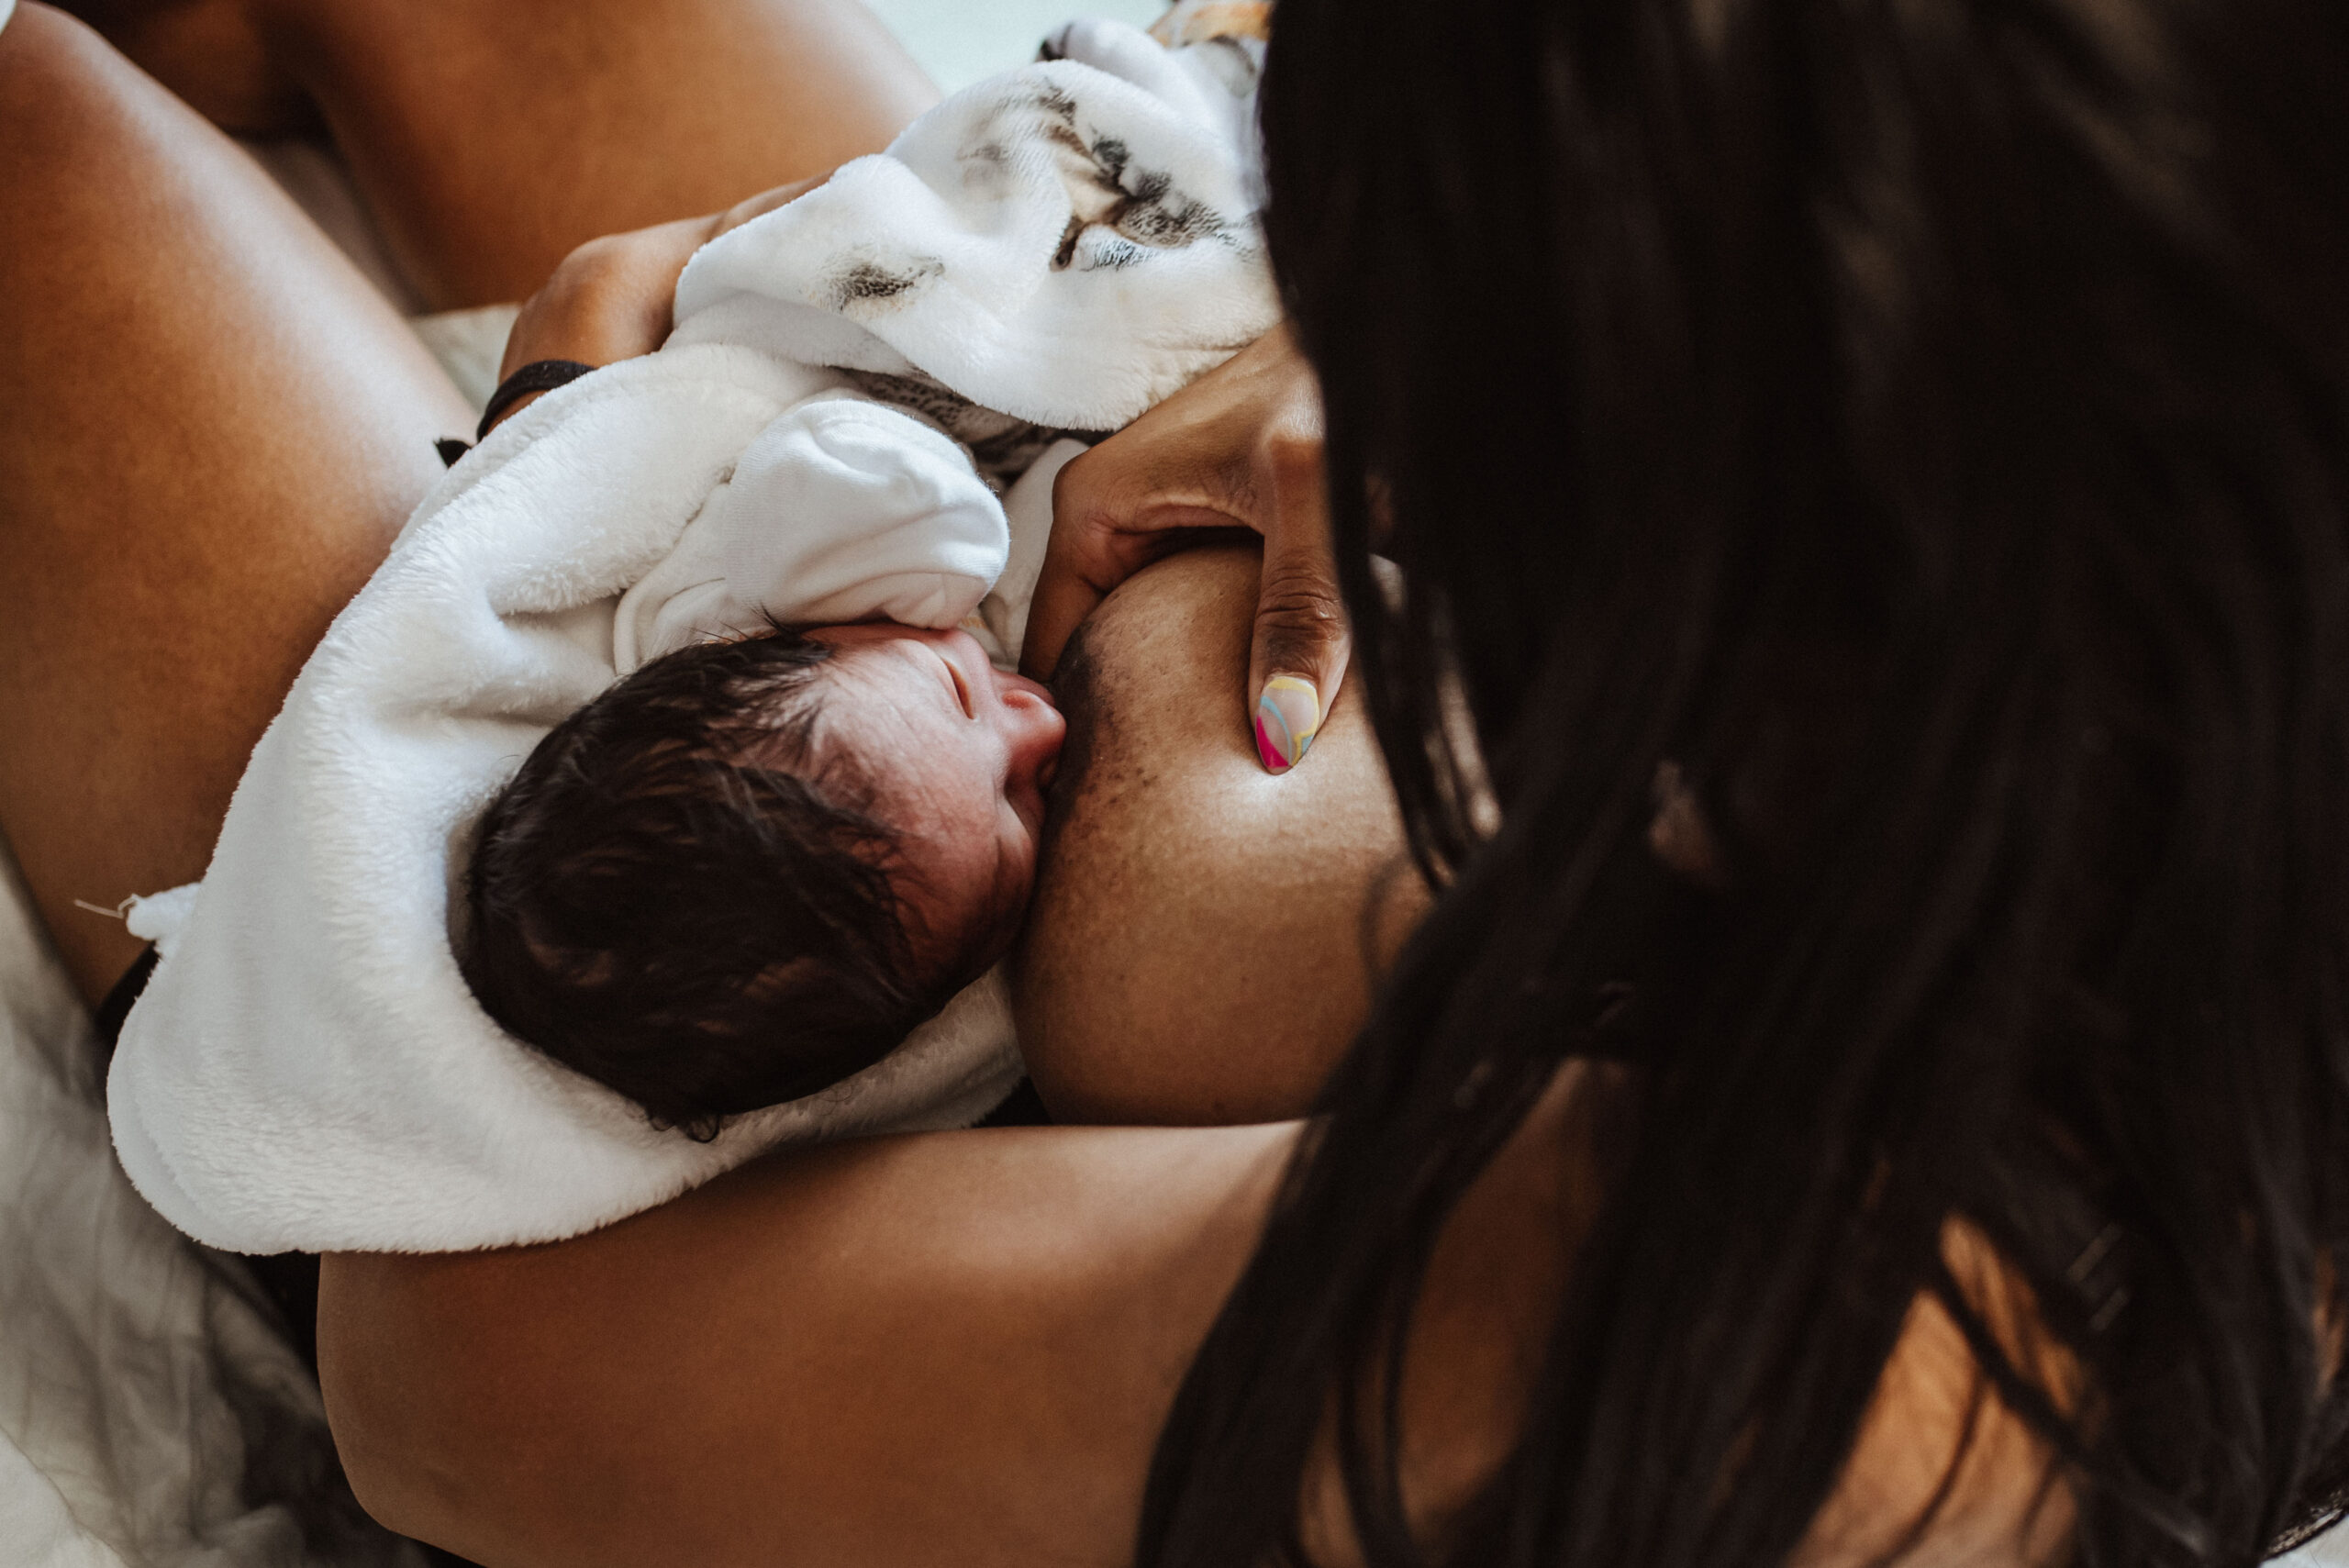 breastfeeding mom in the hospital with her newborn baby boy